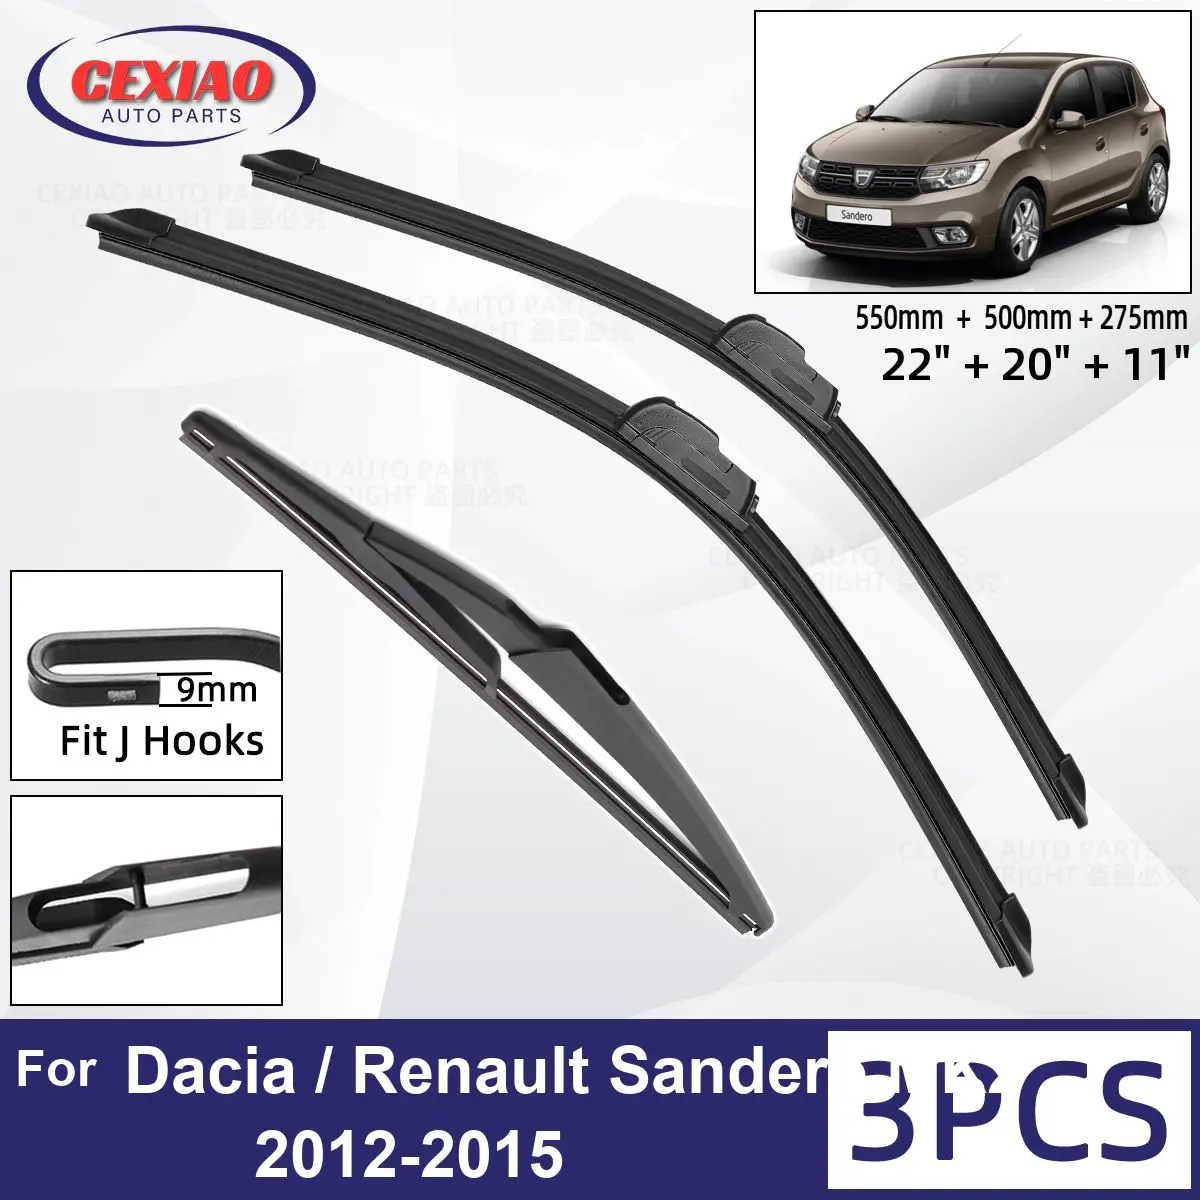 

For Dacia / Renault Sandero MK2 2012-2015 Car Front Rear Wiper Blades Soft Rubber Windscreen Wipers Auto Windshield 22"+20"+11"